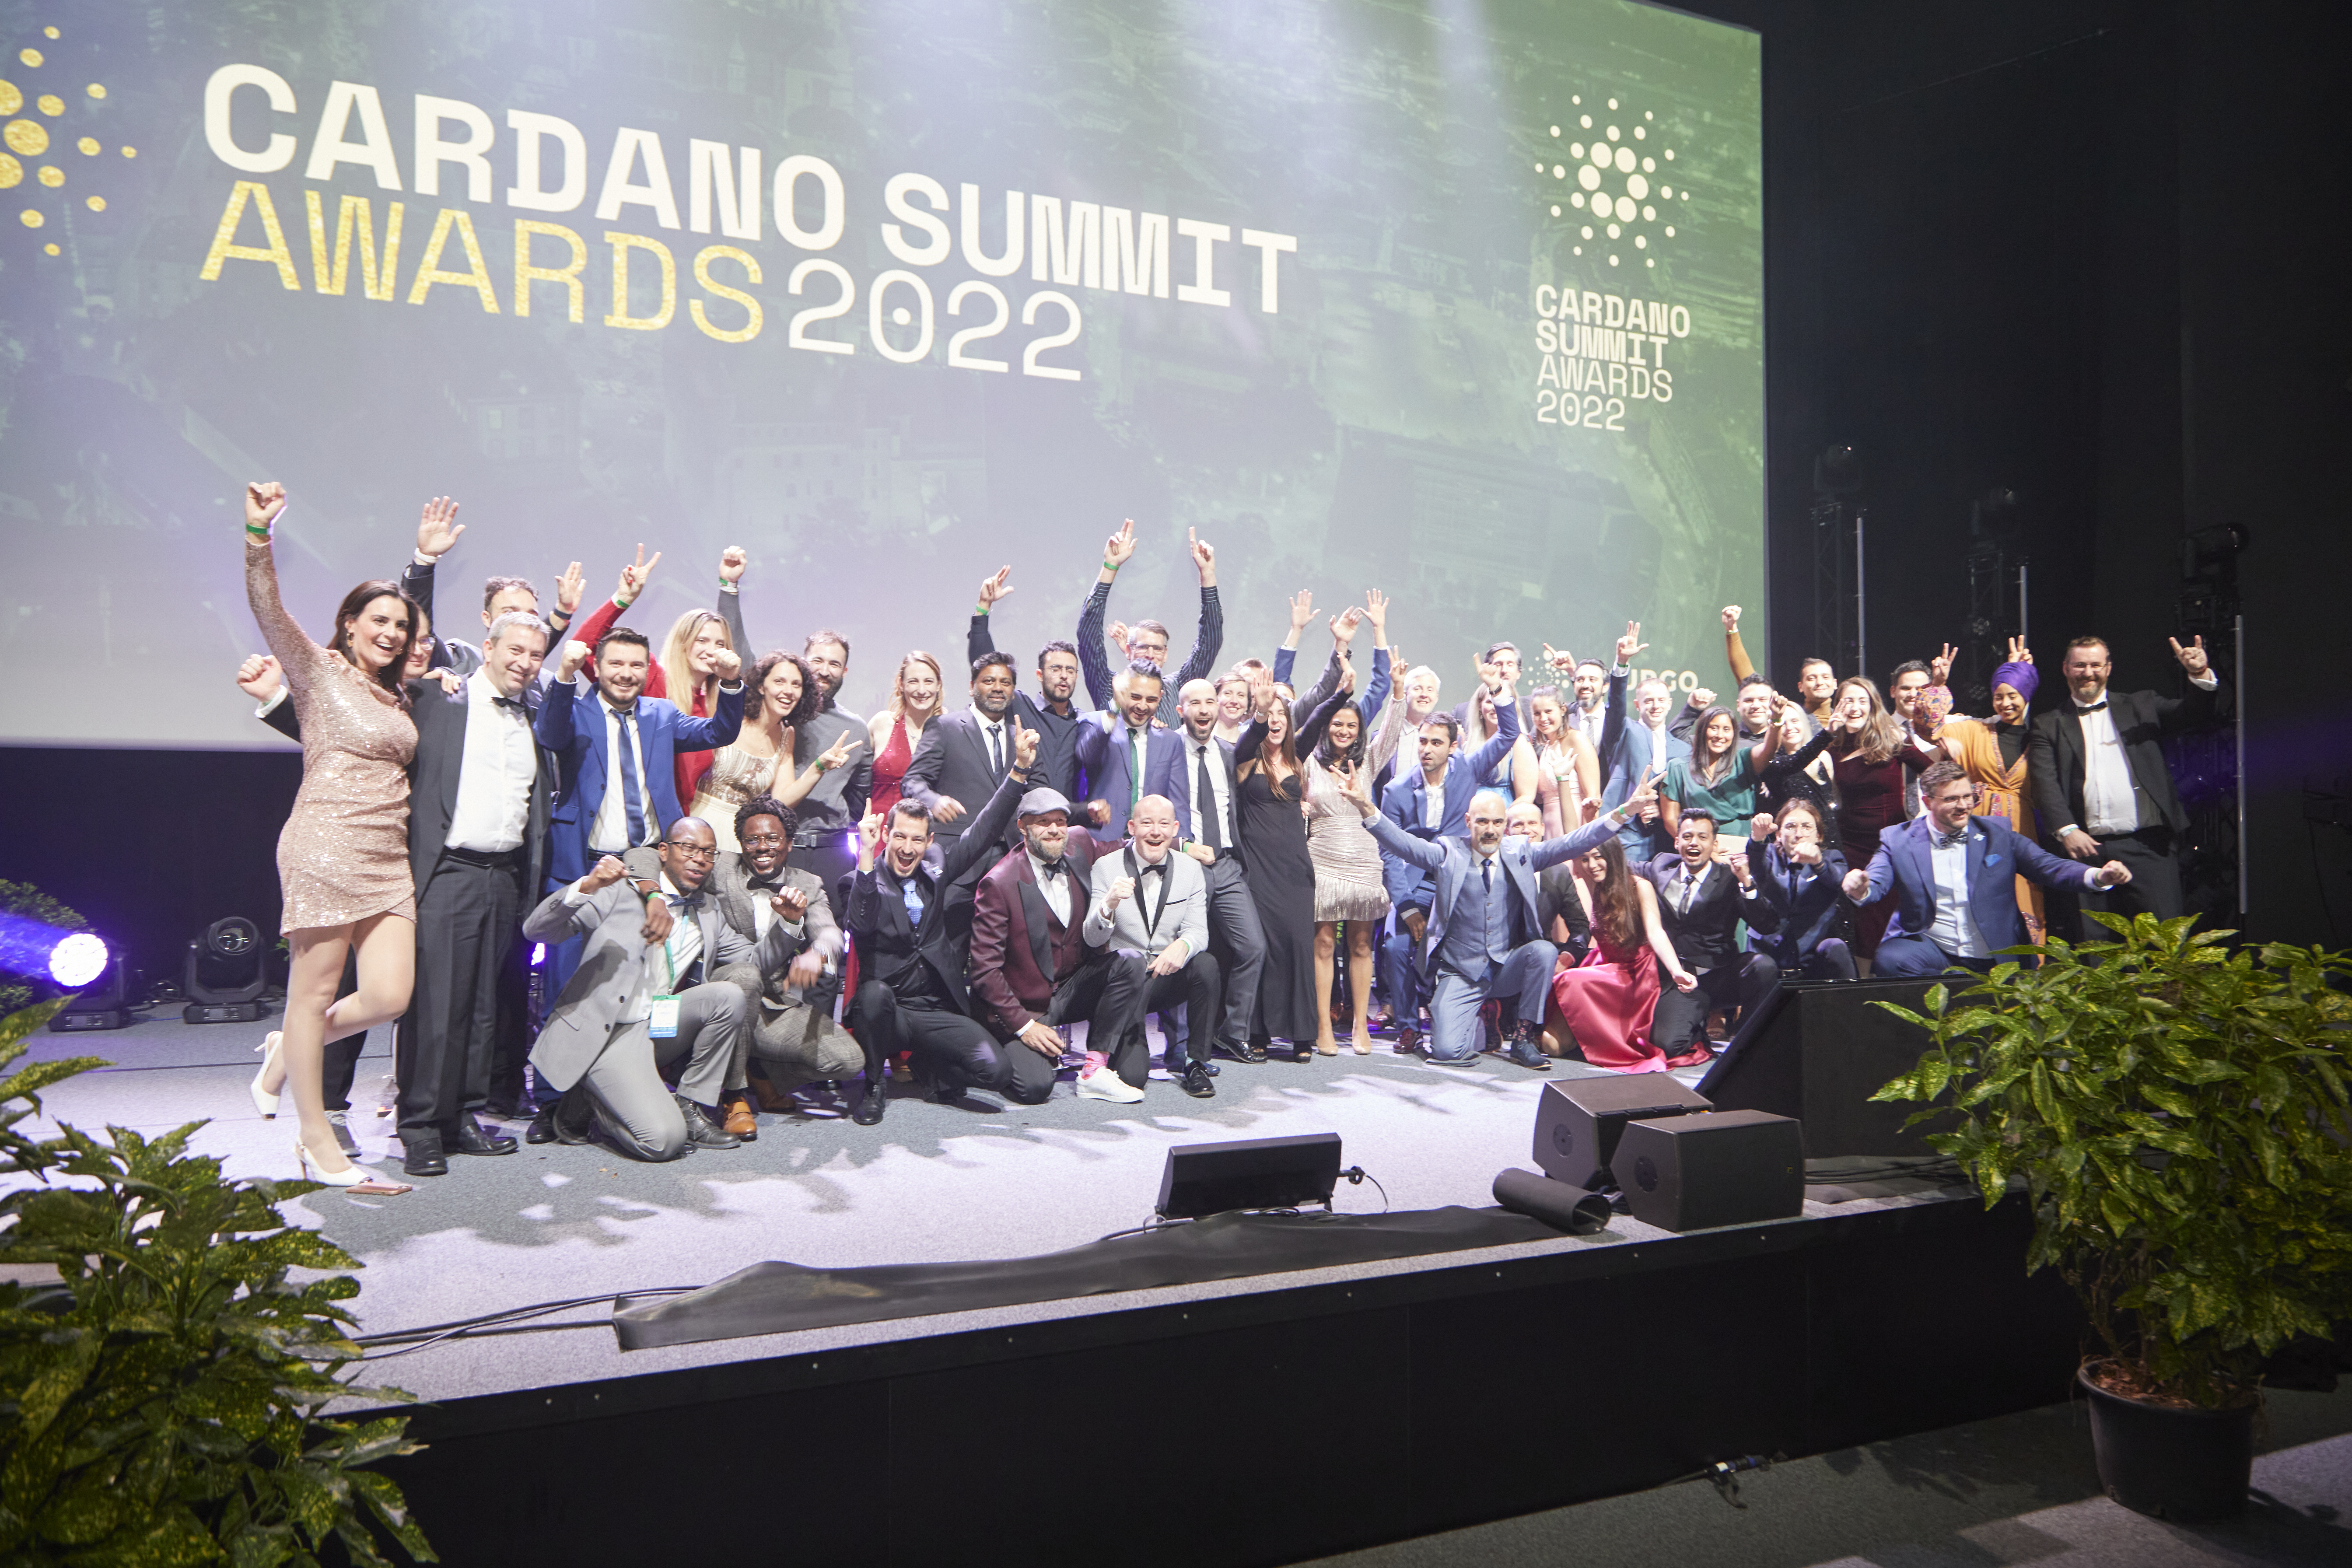 Cardano Summit 2022 Gala Dinner